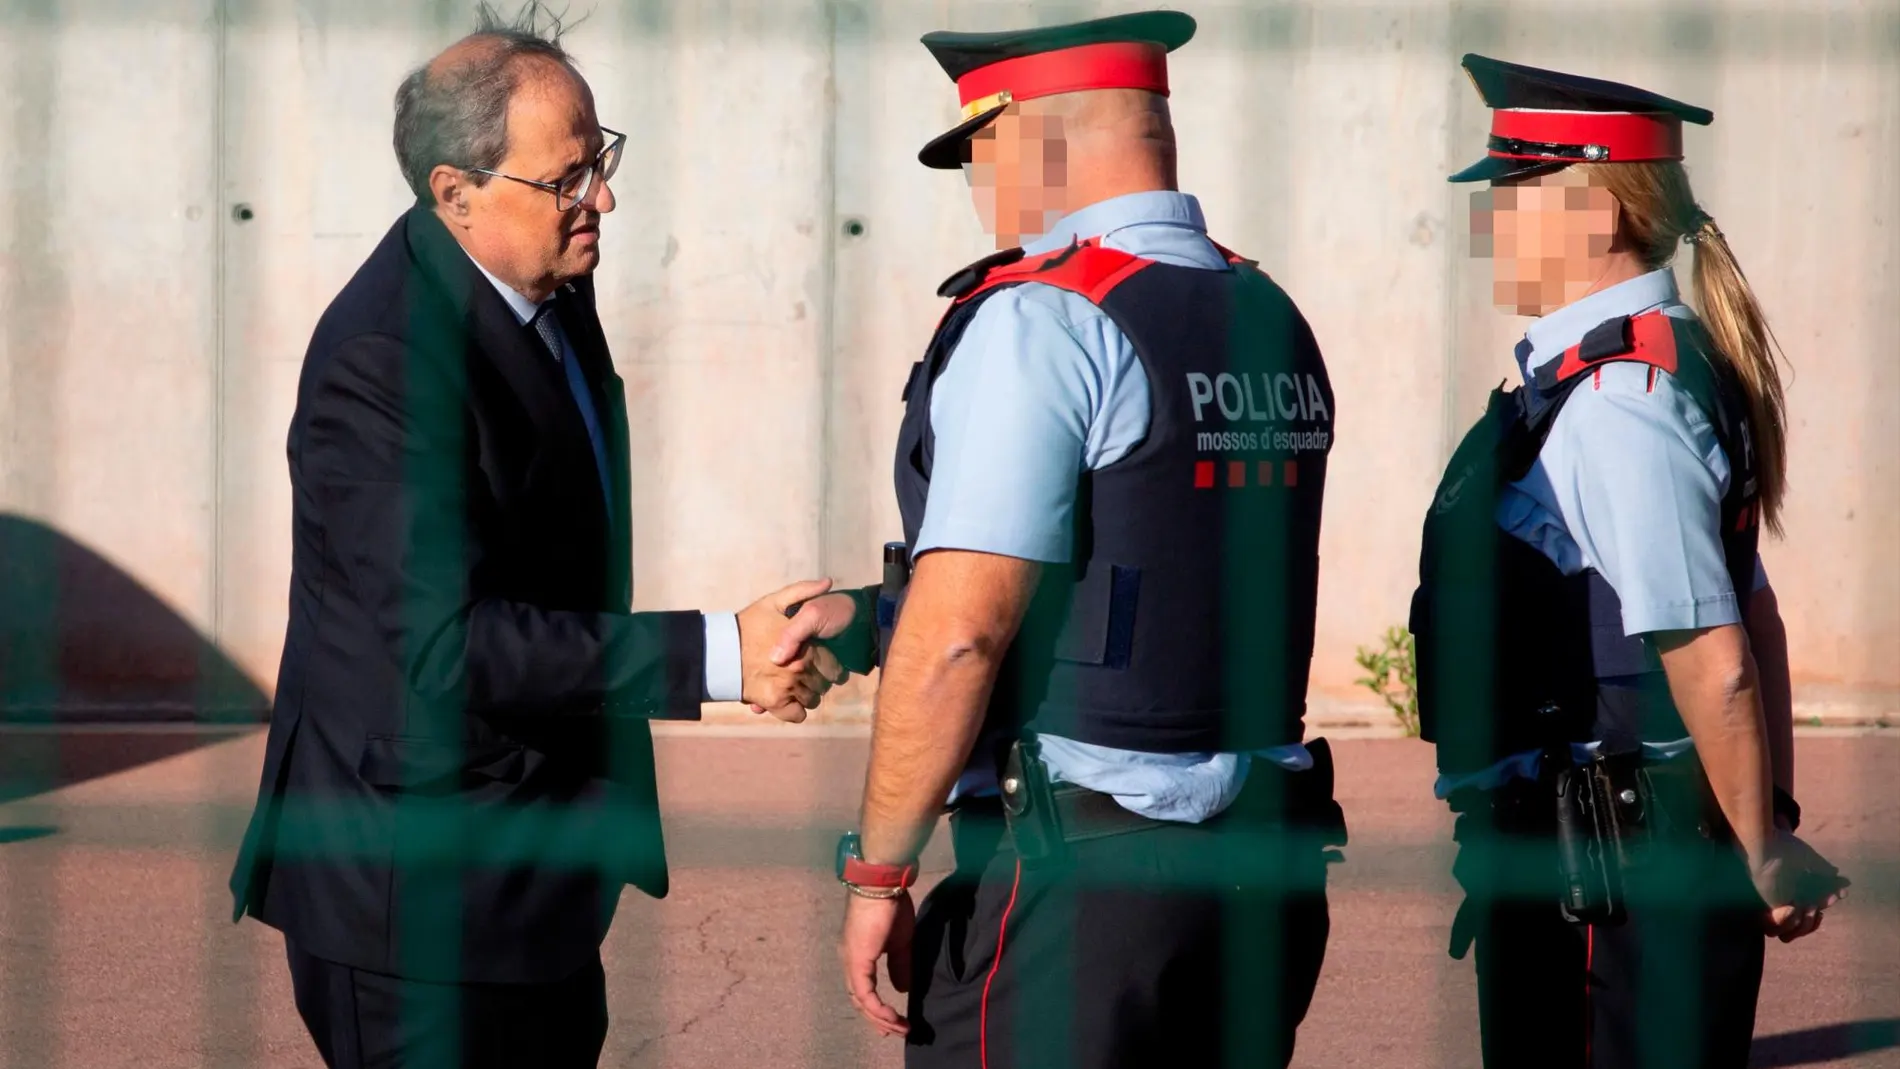 El presidente de la Generalitat, Quim Torra, saluda a dos Mossos d'Esquadra en una imagen de archivo/ep